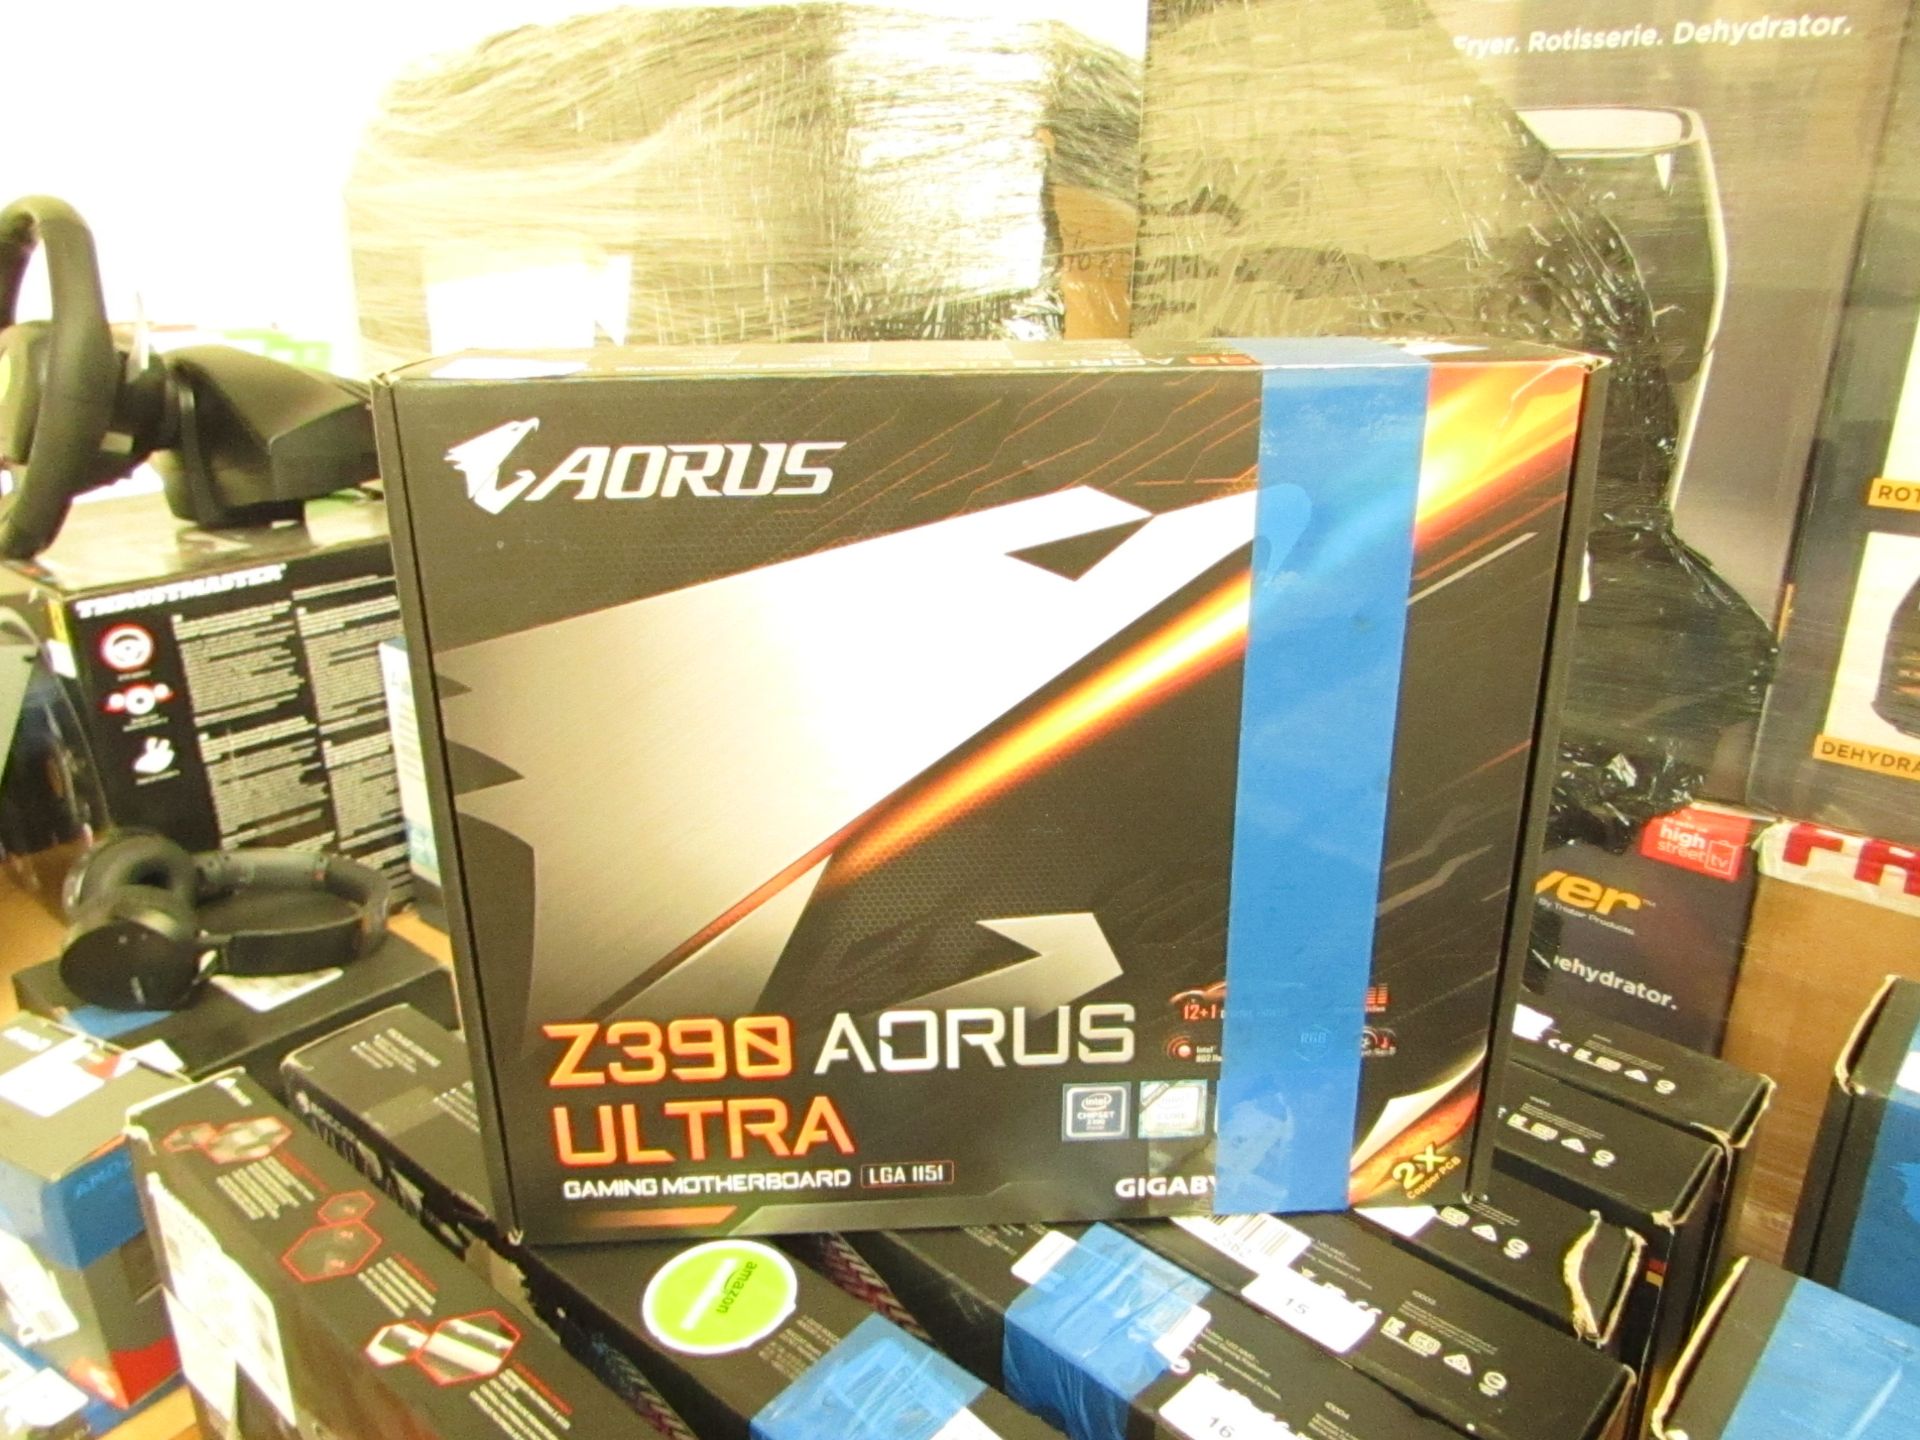 Gigabyte Caorus Z390 Ultra Aorus Gaming Motherboard. LGA 1151. Boxed But Untested. RRP œ236.98